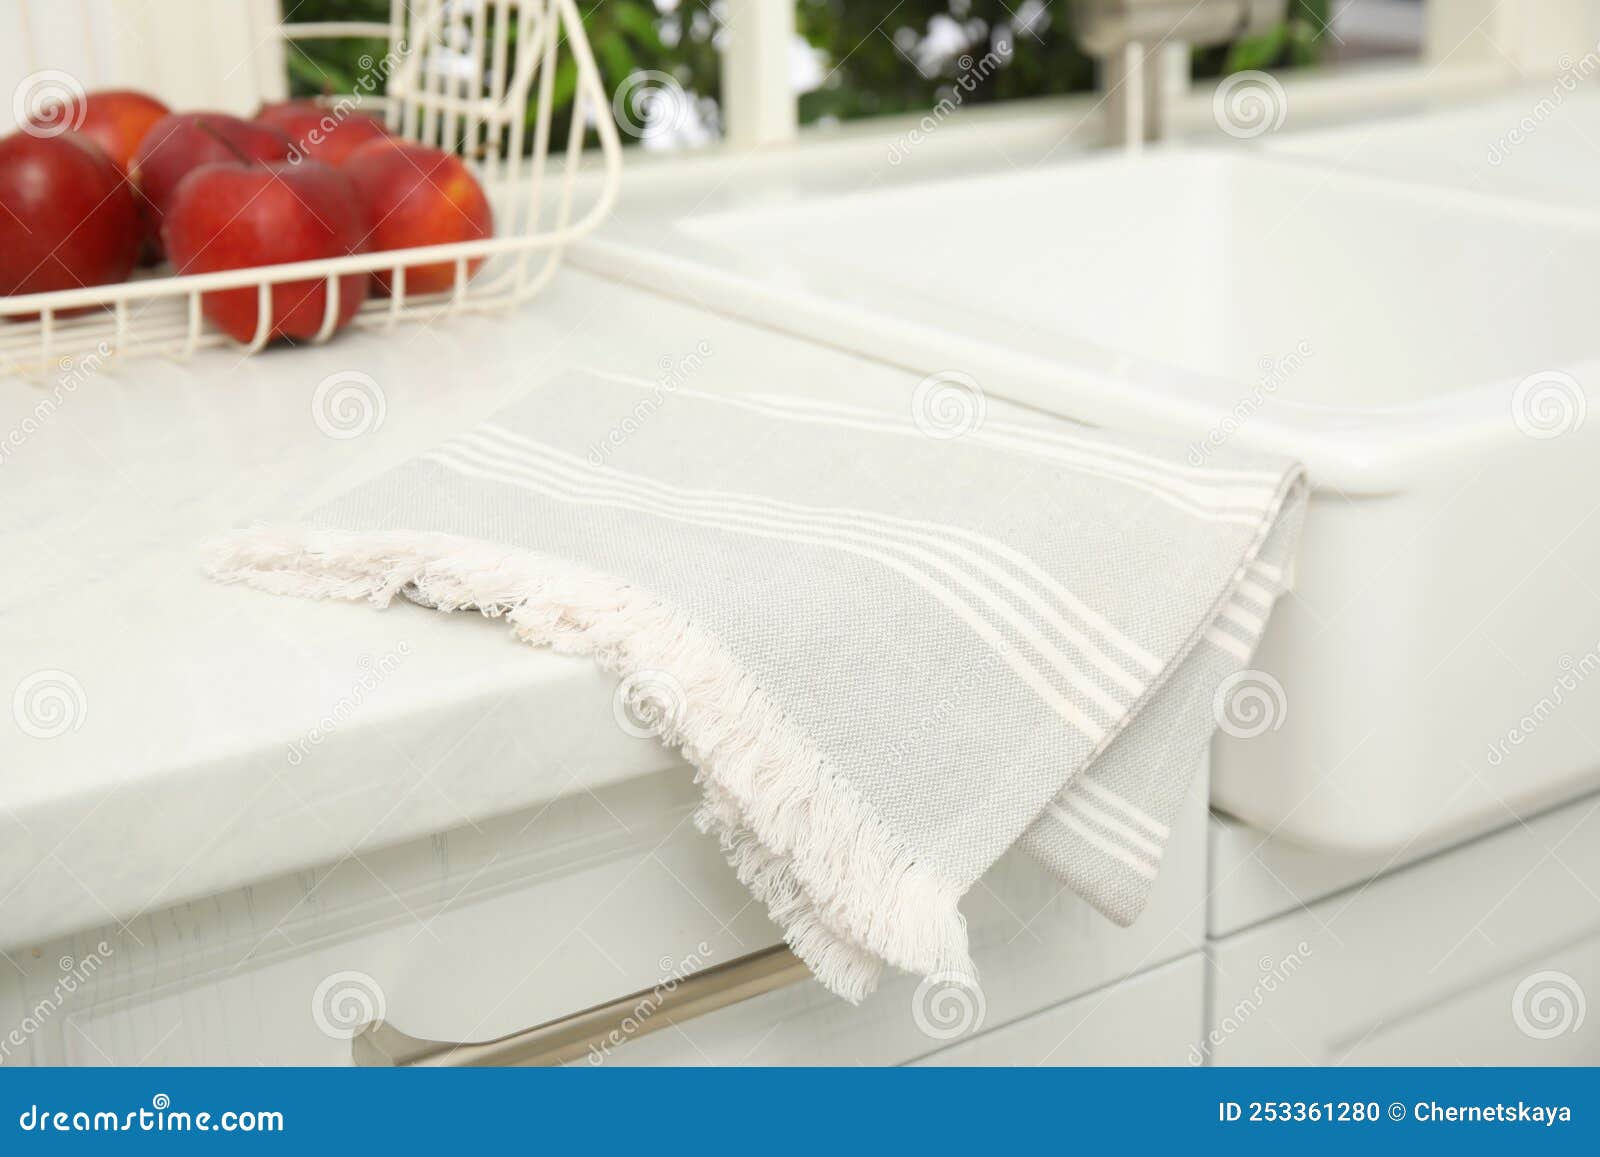 kitchen idea to keep towel near sink